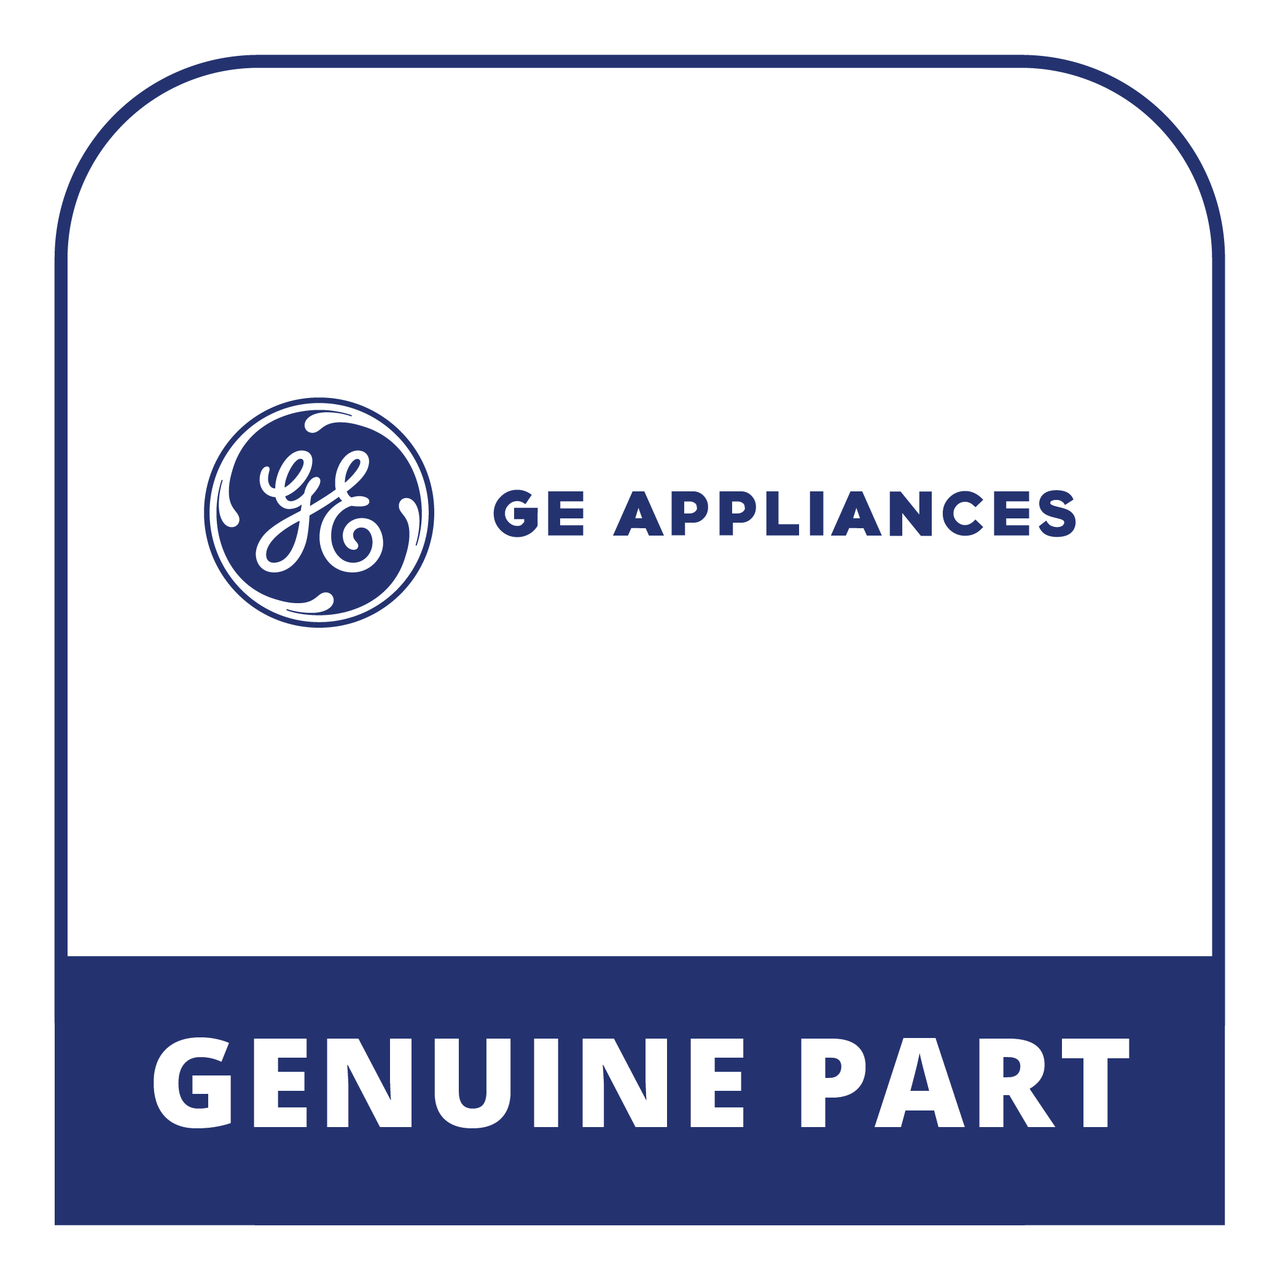 GE Appliances WB44X47327 - Hidden Bake Element - Genuine GE Appliances Part